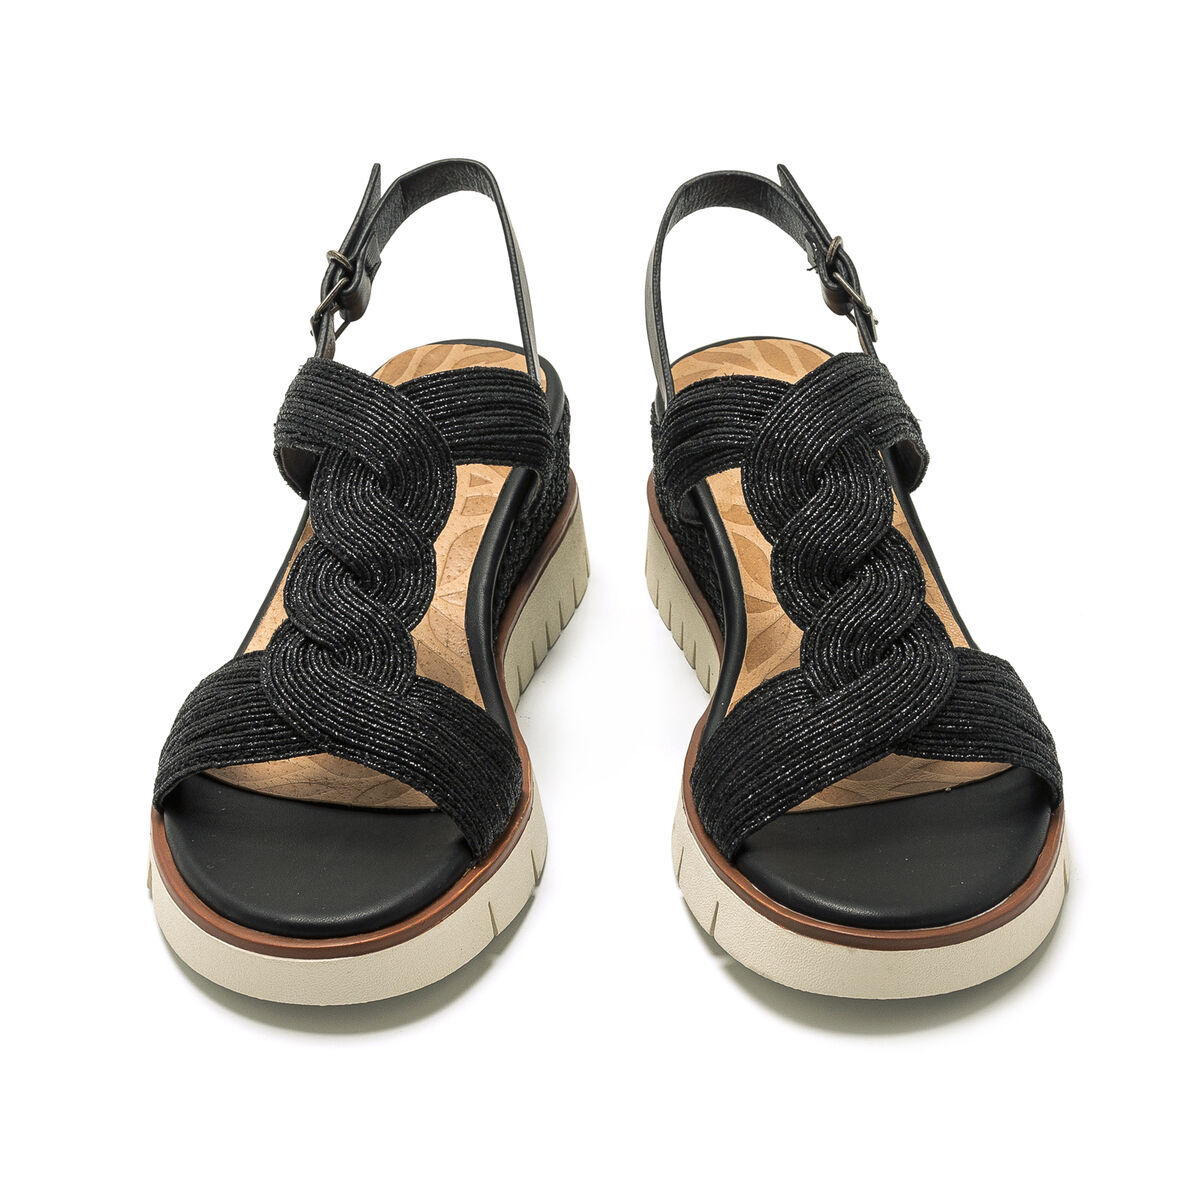 Sandalias de cuna de Mujer modelo KLEIN de MTNG image number 2